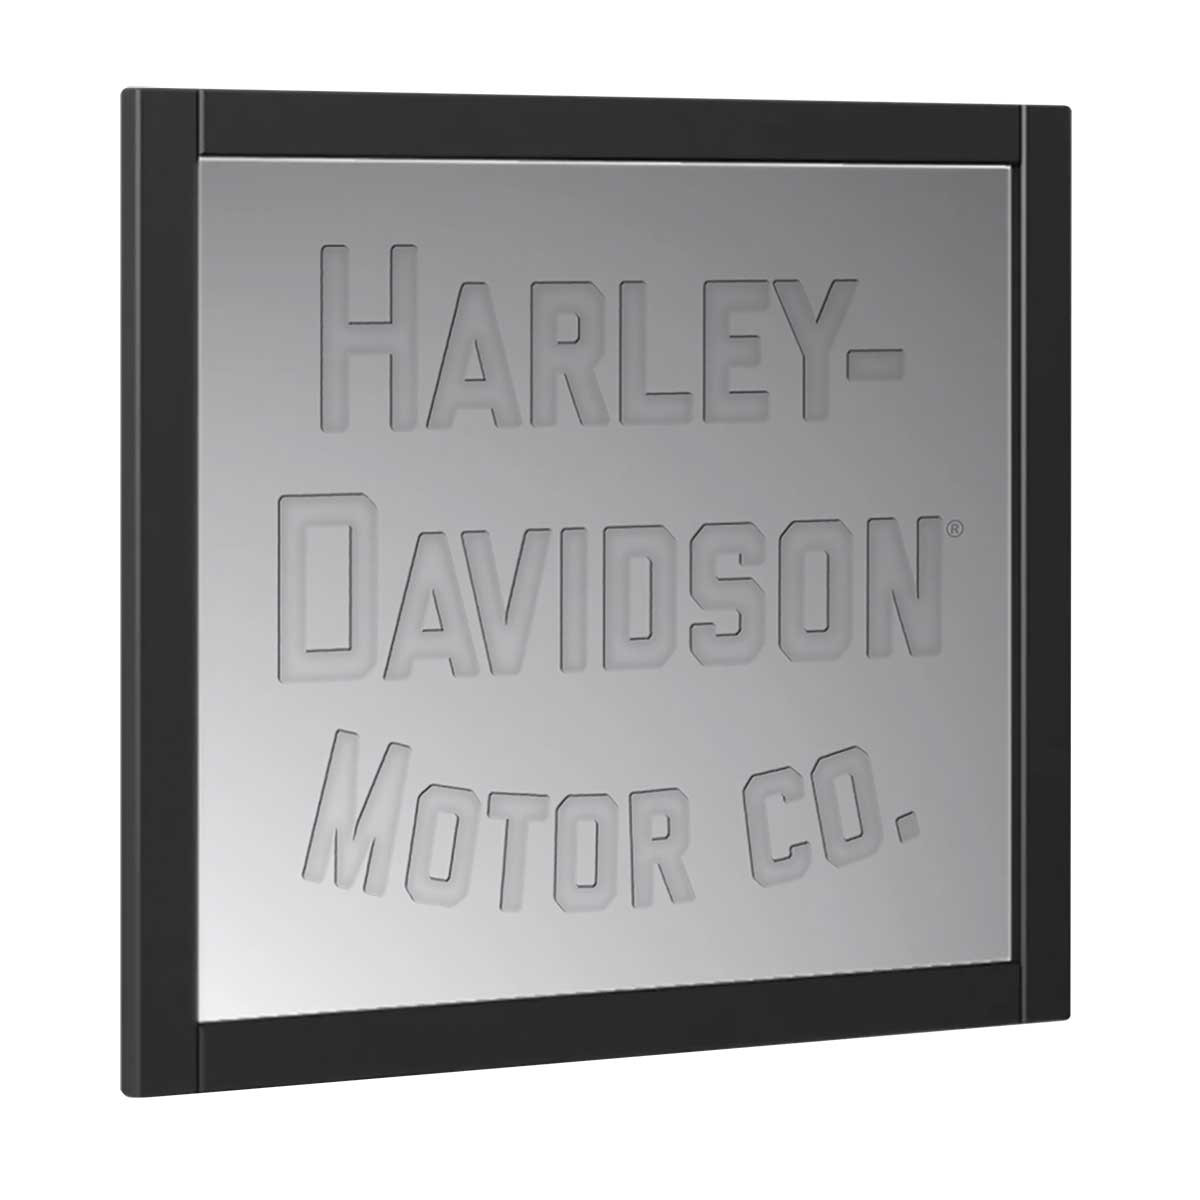 HARLEY DAVIDSON  MOTOR CO. MIRROR